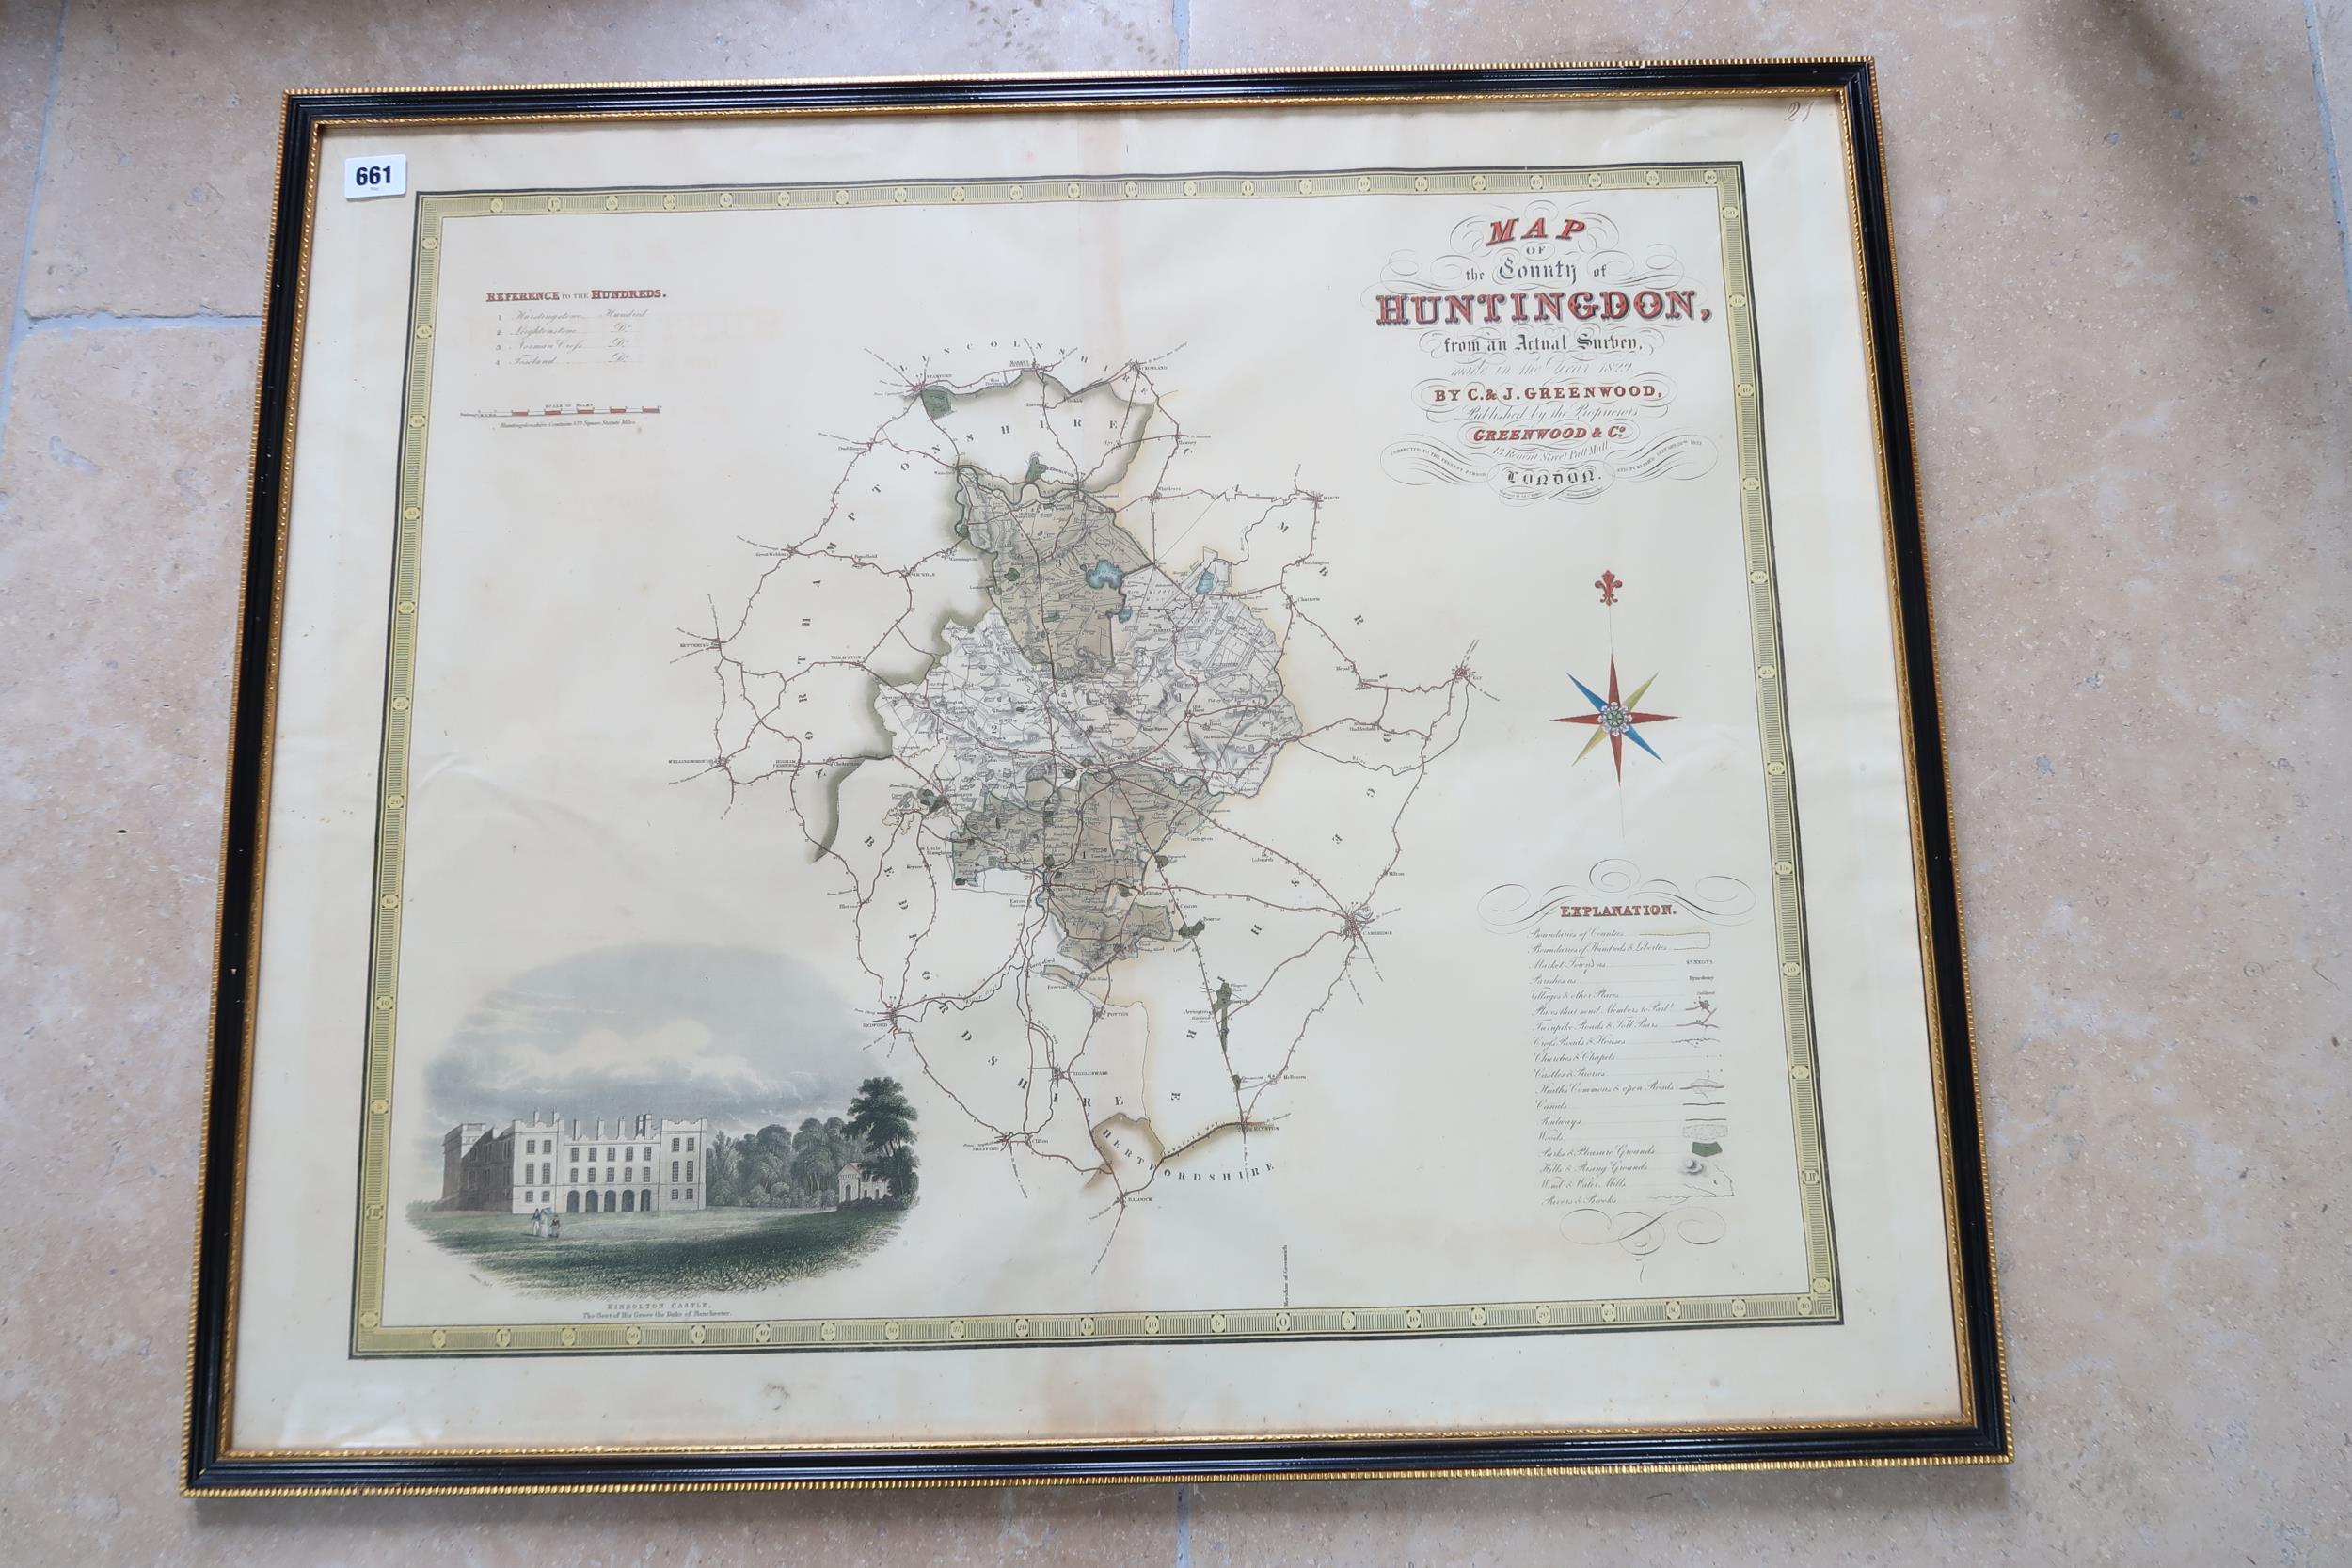 A framed map of Huntingdon Castle by Greenwood circa 1829 - 77cm x 65cm